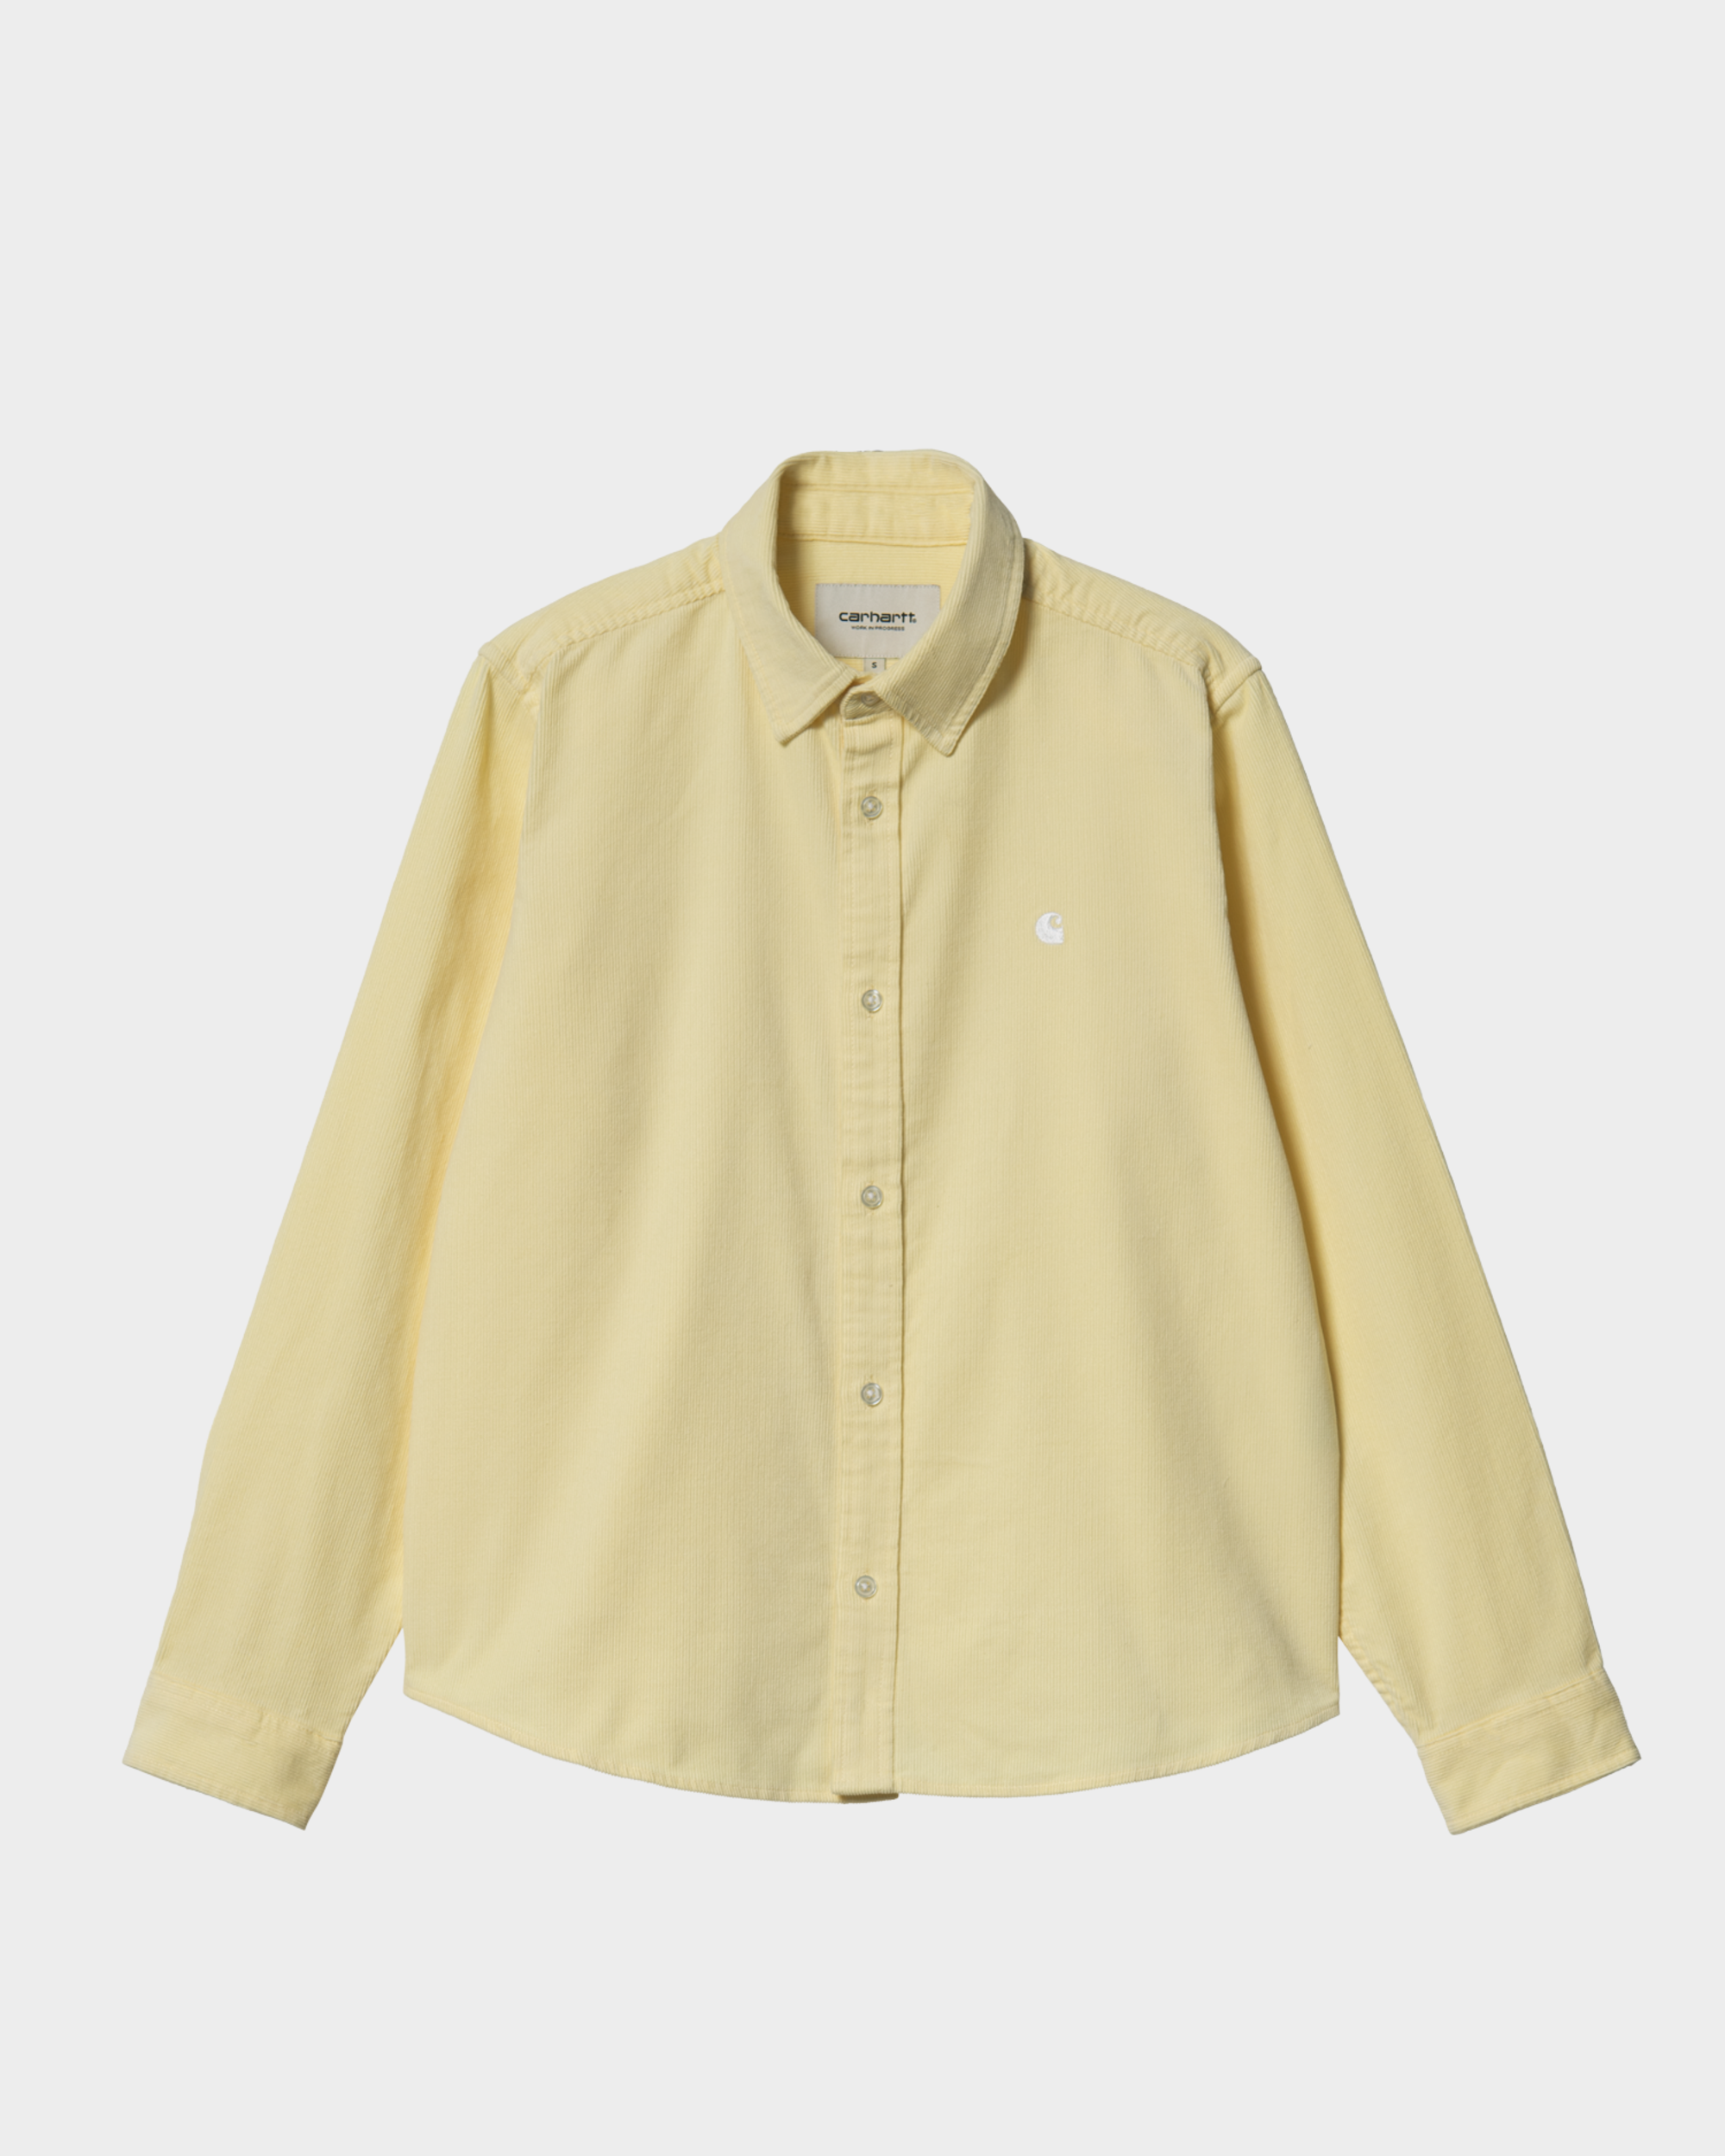 Carhartt W' Longsleeve Madison Fine Cord Shirt Soft Yellow/White